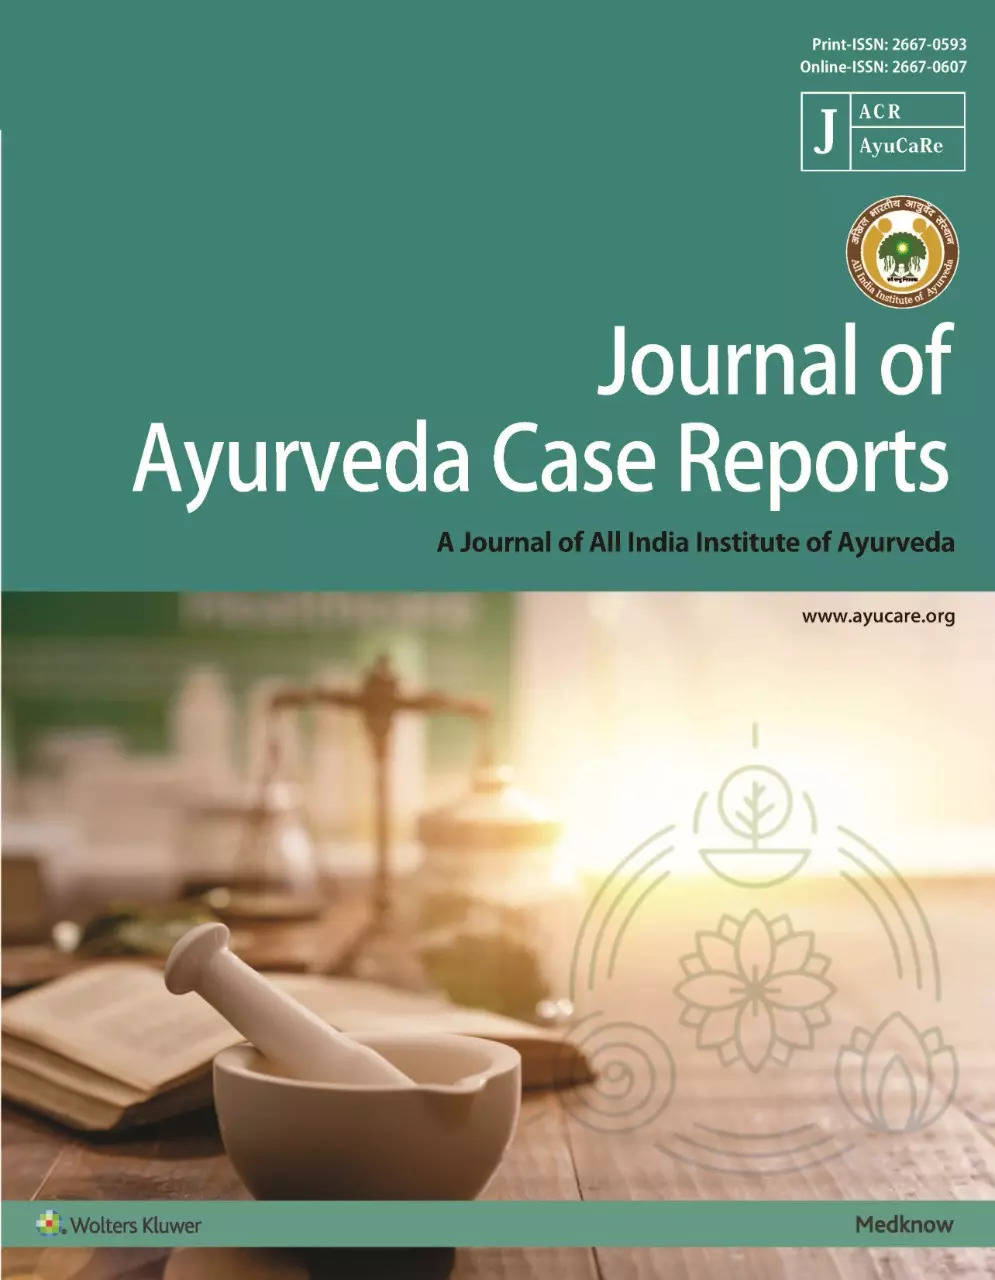 Ayurveda Case reports